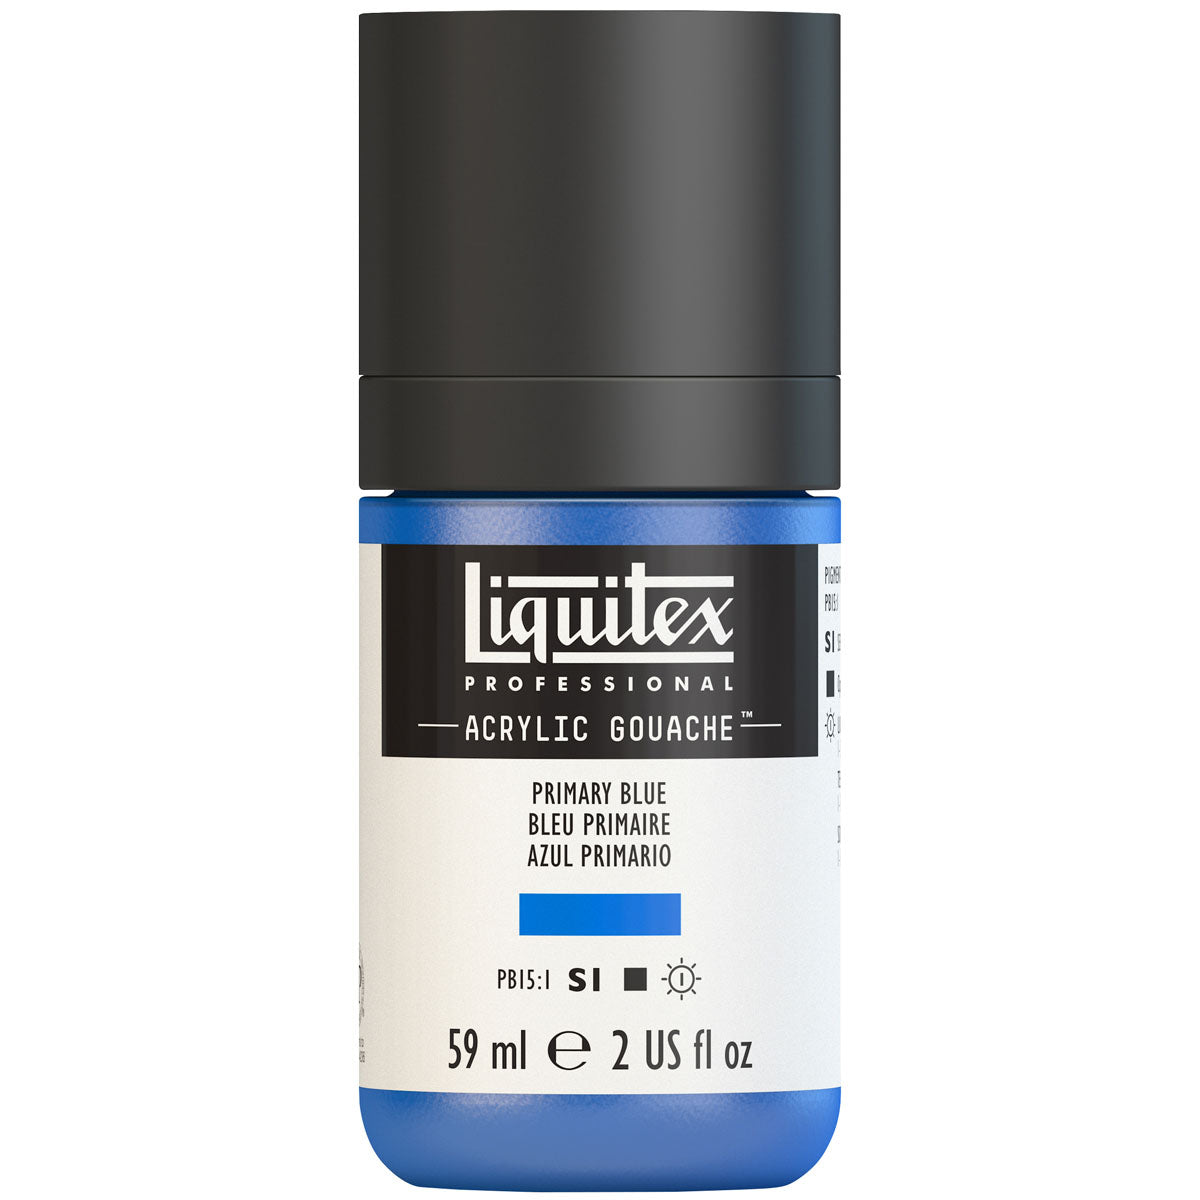 Liquitex - Acryl Gouache 59ml S1 - Primär Blau